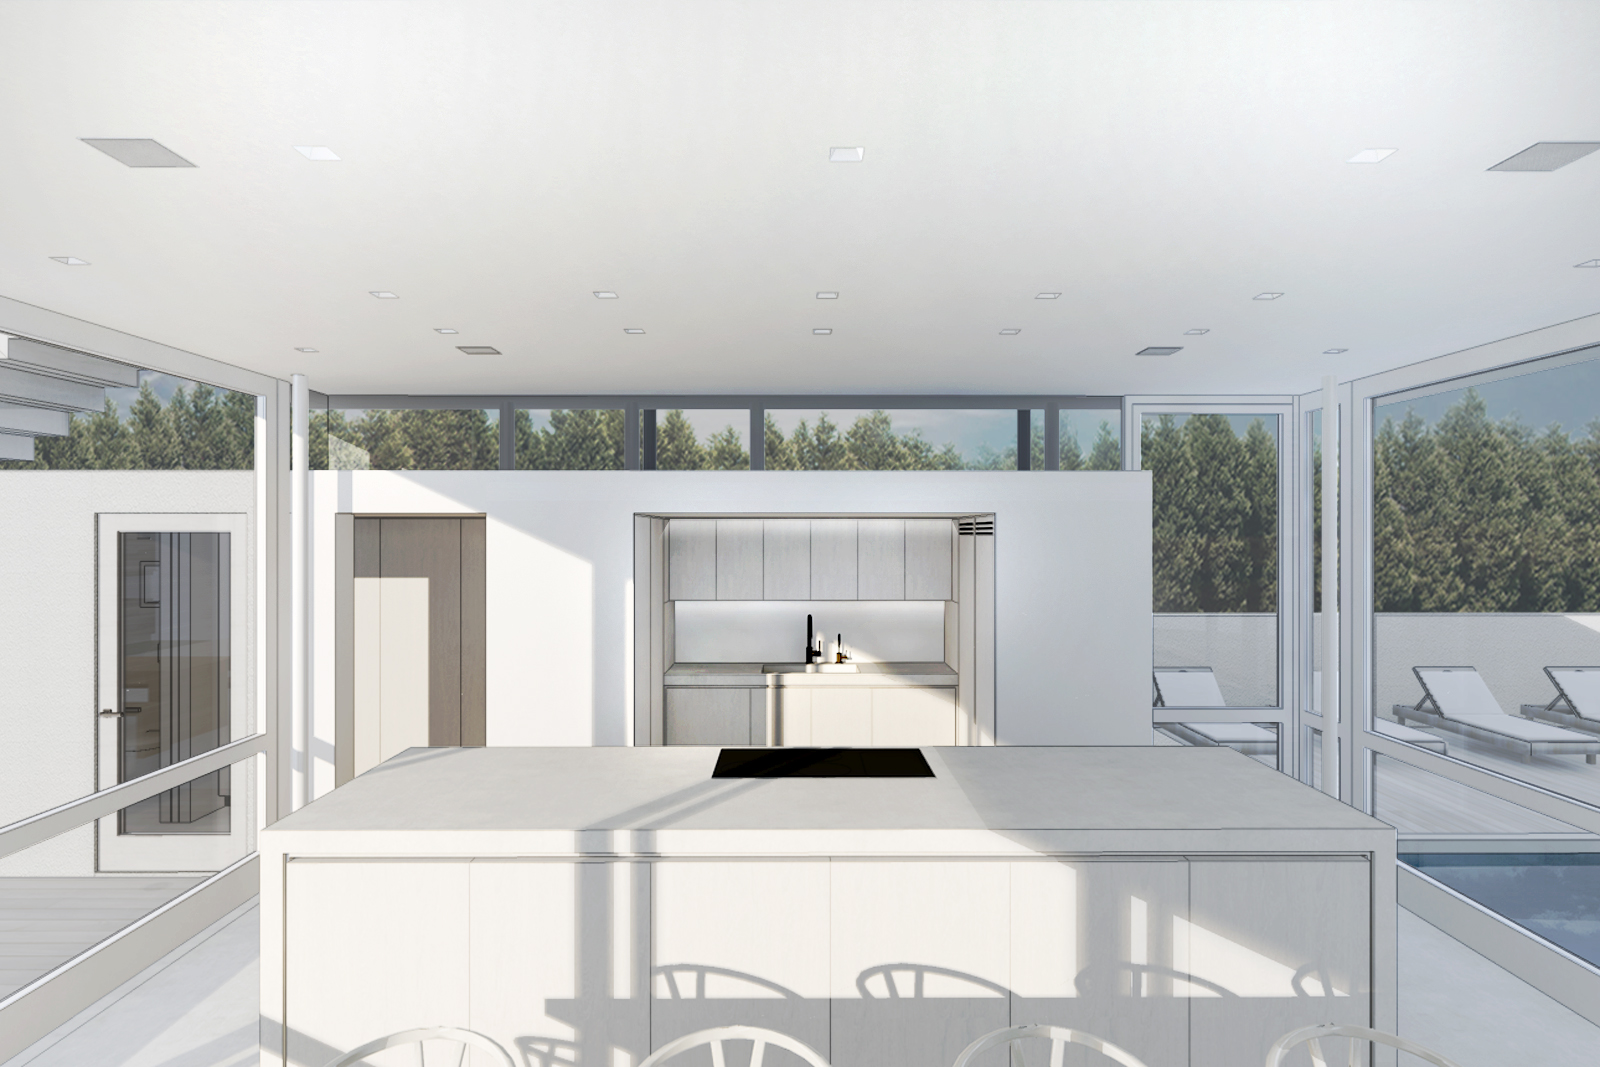 03-res4-resolution-4-architecture-prefab-renovation-surfside-residence-addition-interior-kitchen-dining-rendering.jpg